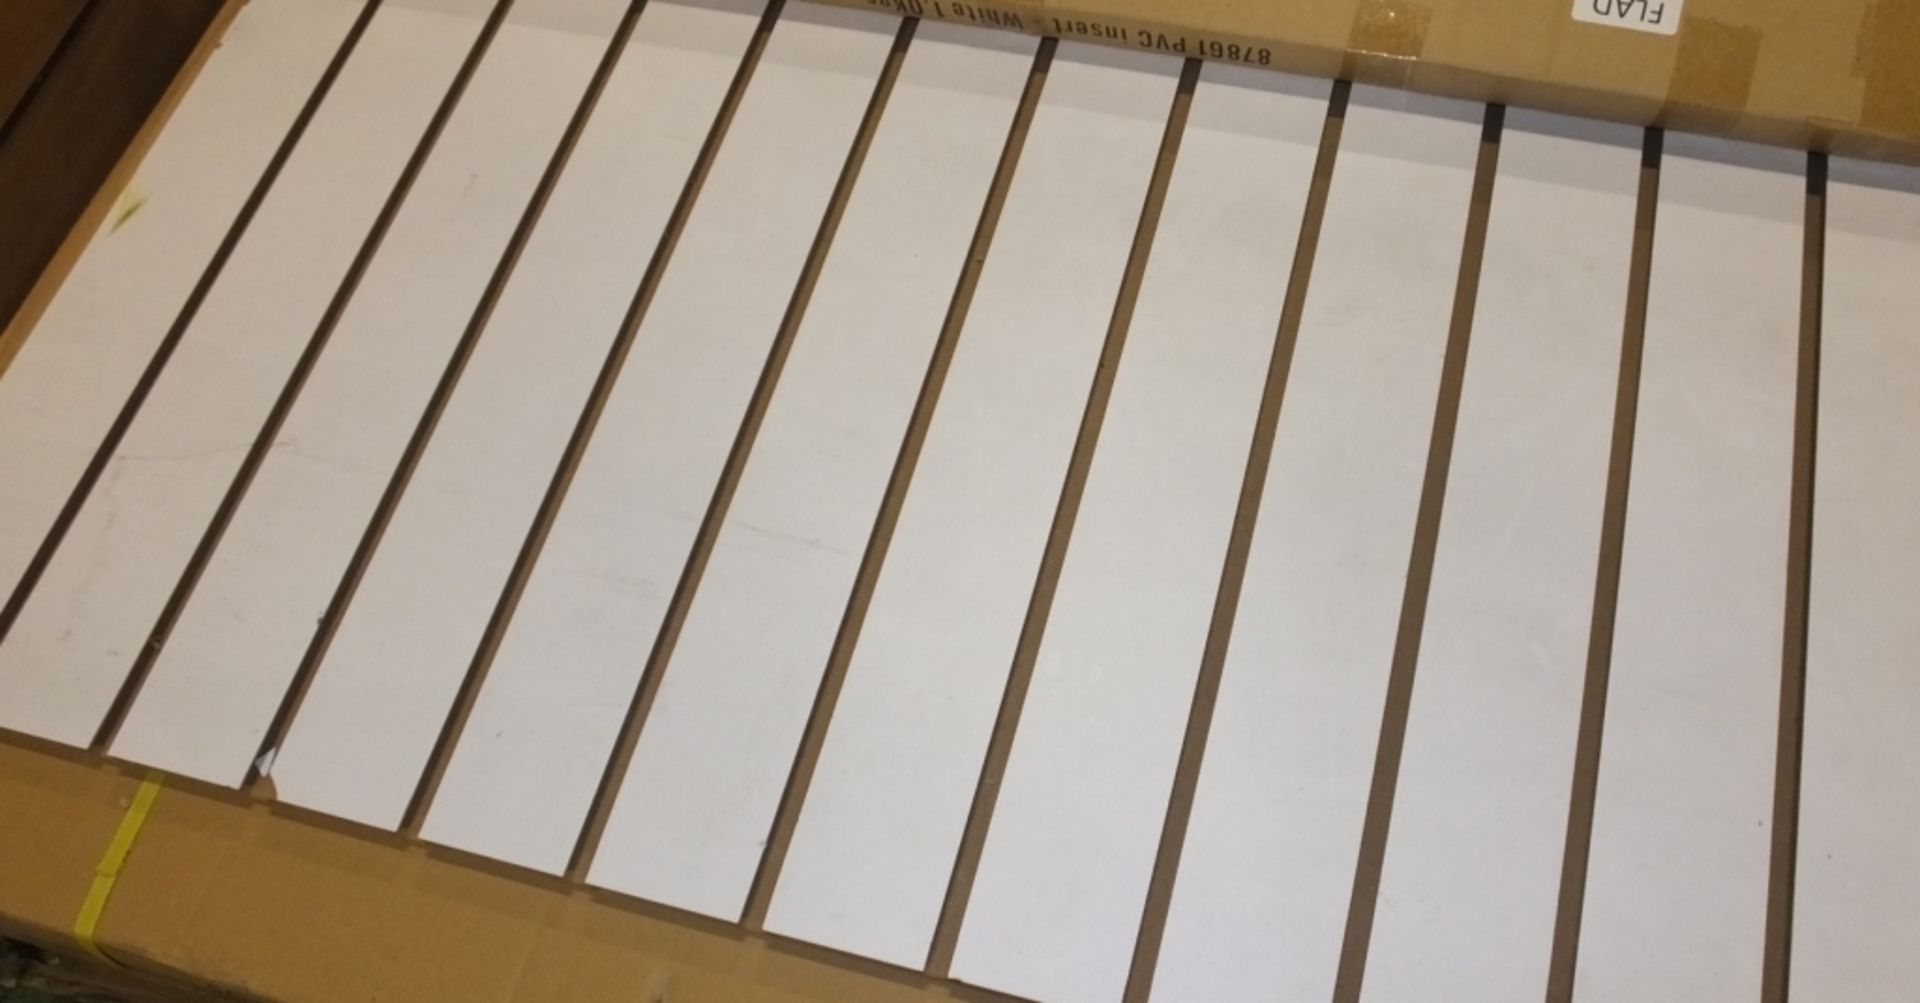 7x PVC Inserts Display, Slatwall Panels White 120cm Squared - Image 2 of 3